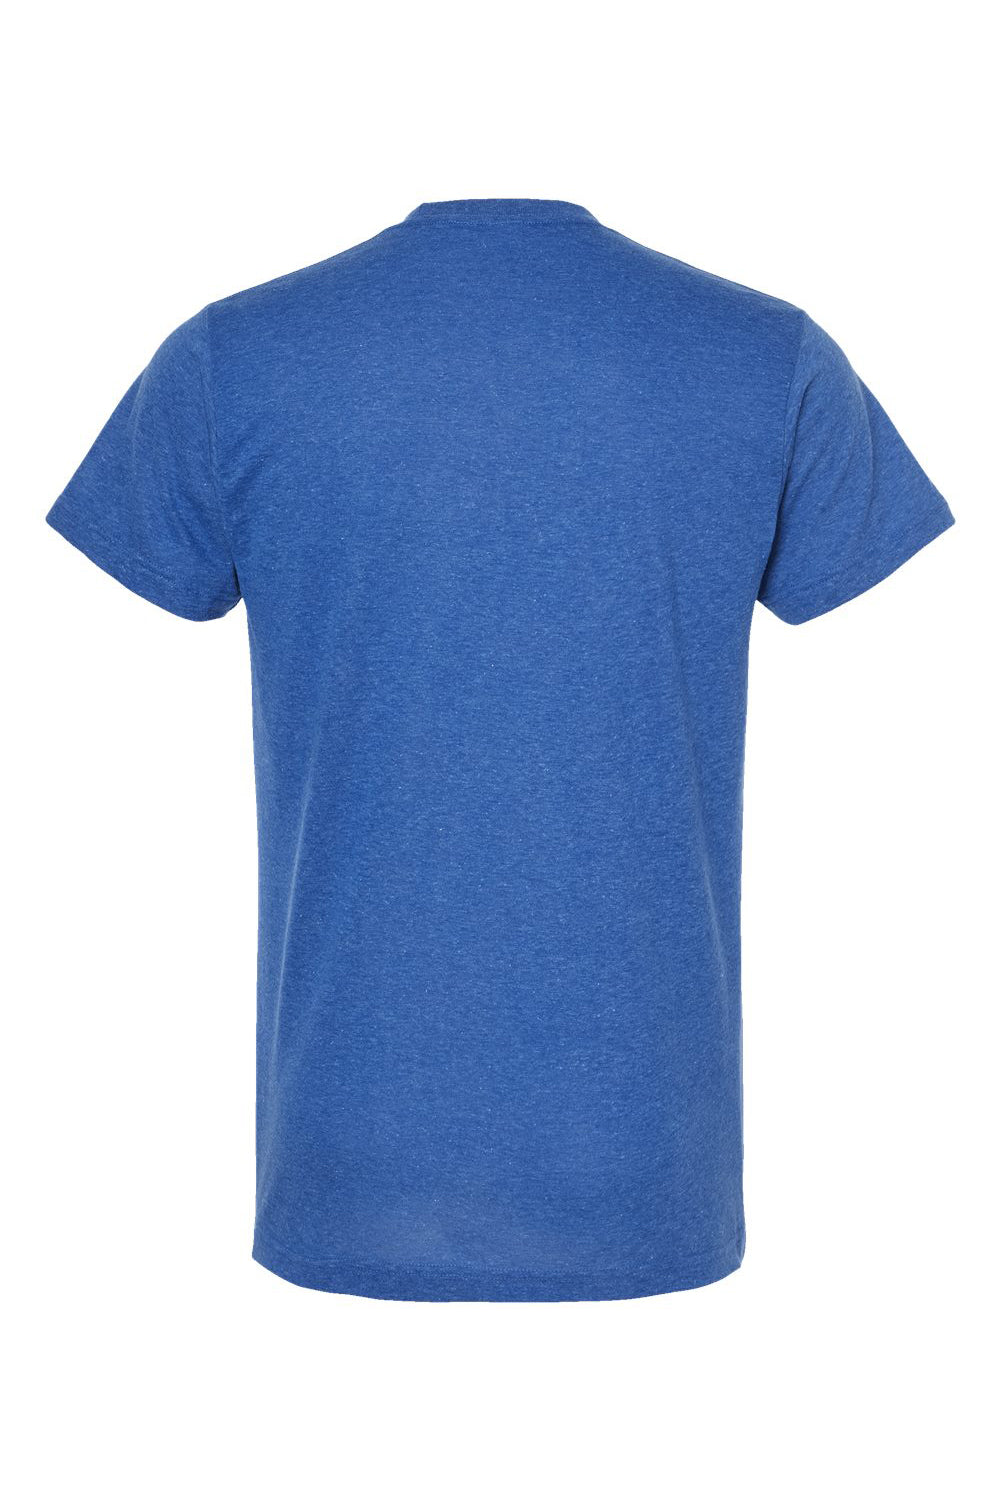 Tultex 241 Mens Poly-Rich Short Sleeve Crewneck T-Shirt Heather Royal Blue Flat Back